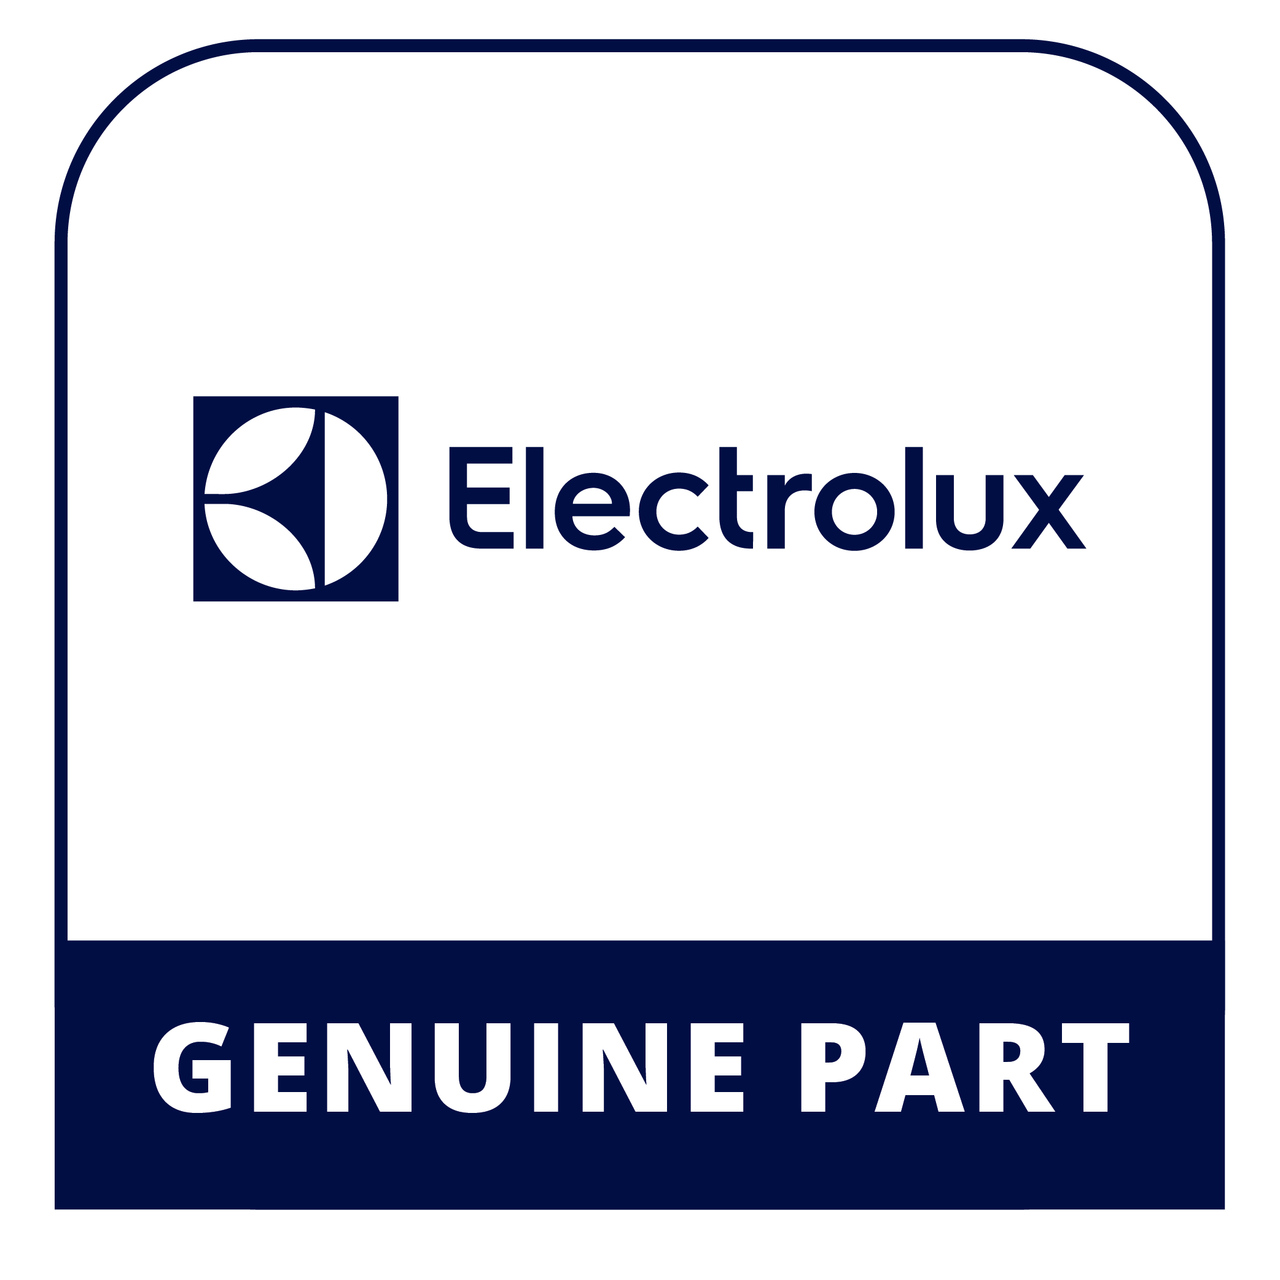 Frigidaire - Electrolux 5304491604 Pad - Genuine Electrolux Part